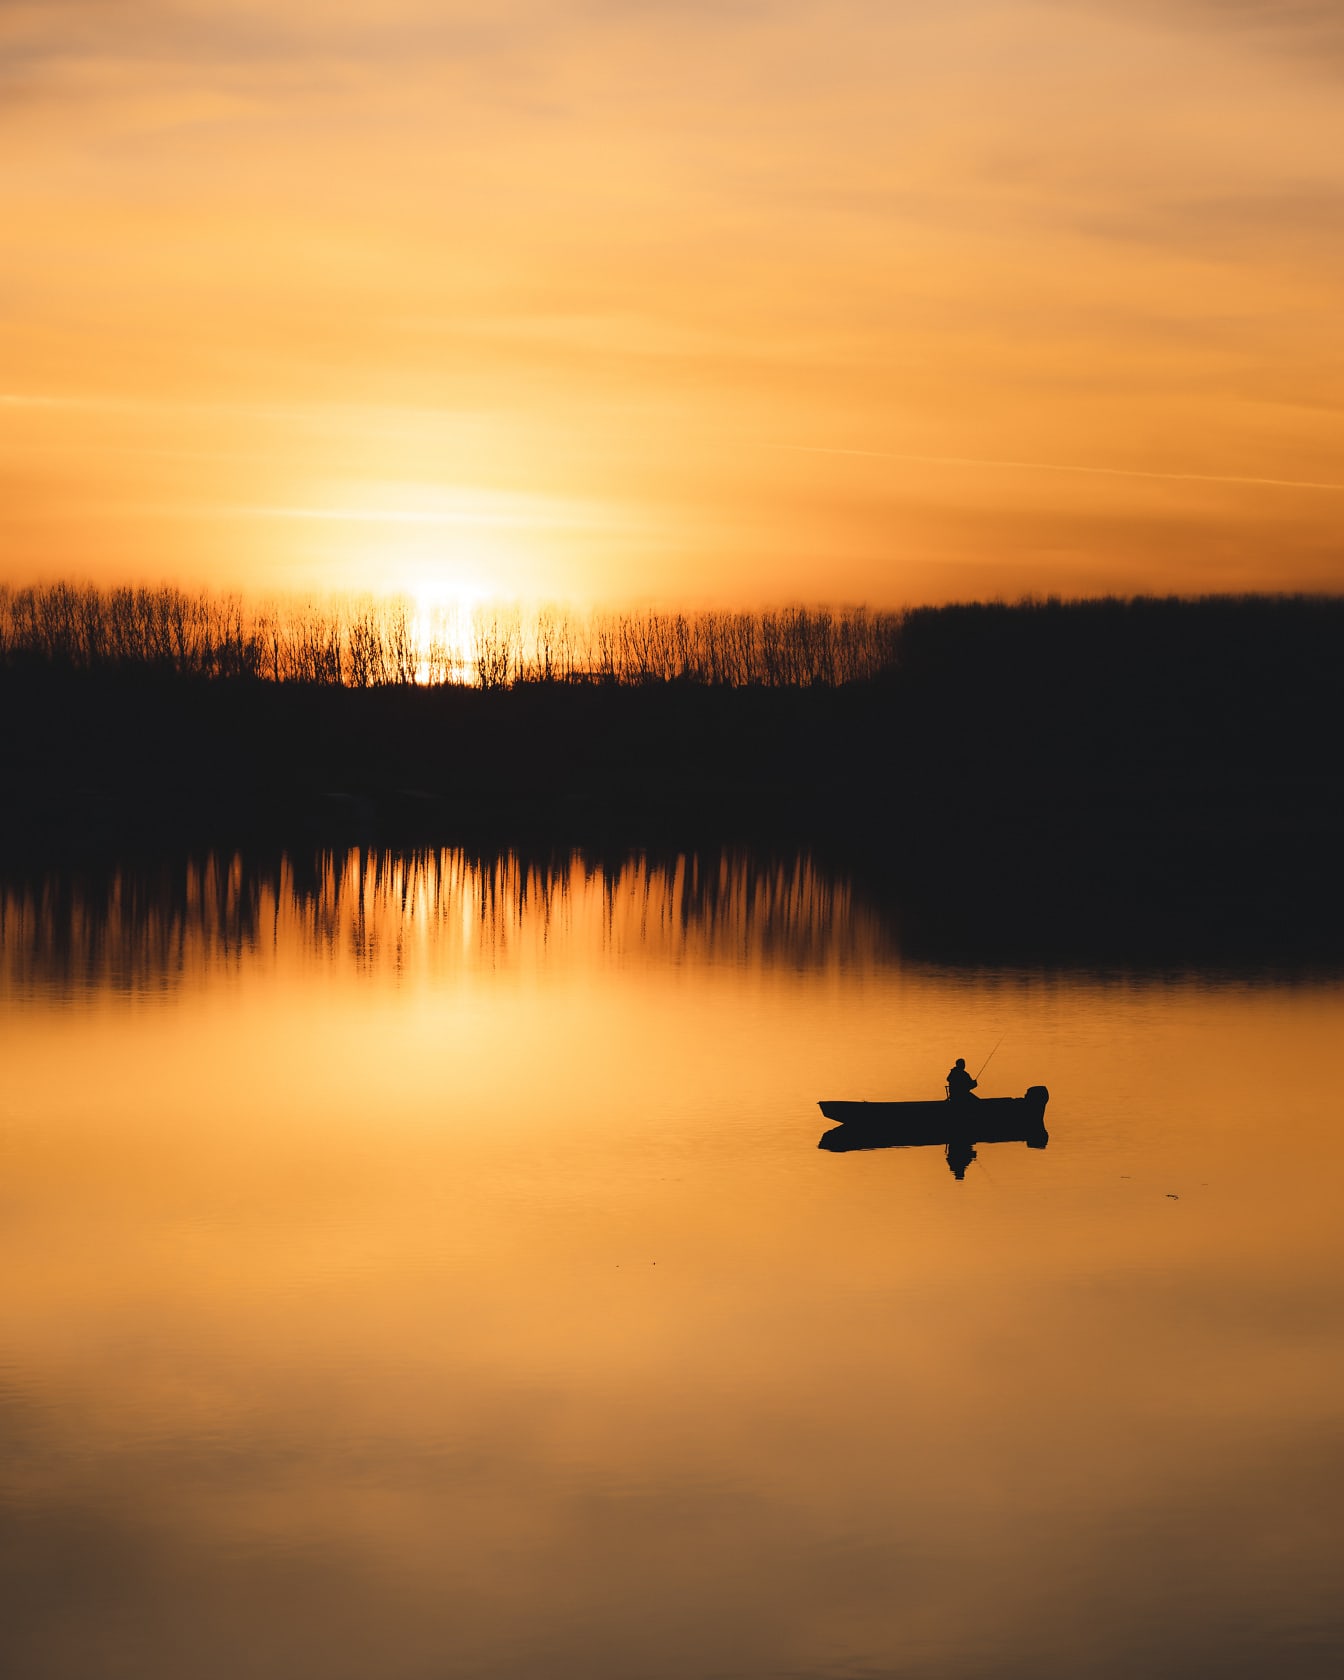 Matahari terbenam oranye kuning di tepi sungai dengan siluet perahu nelayan